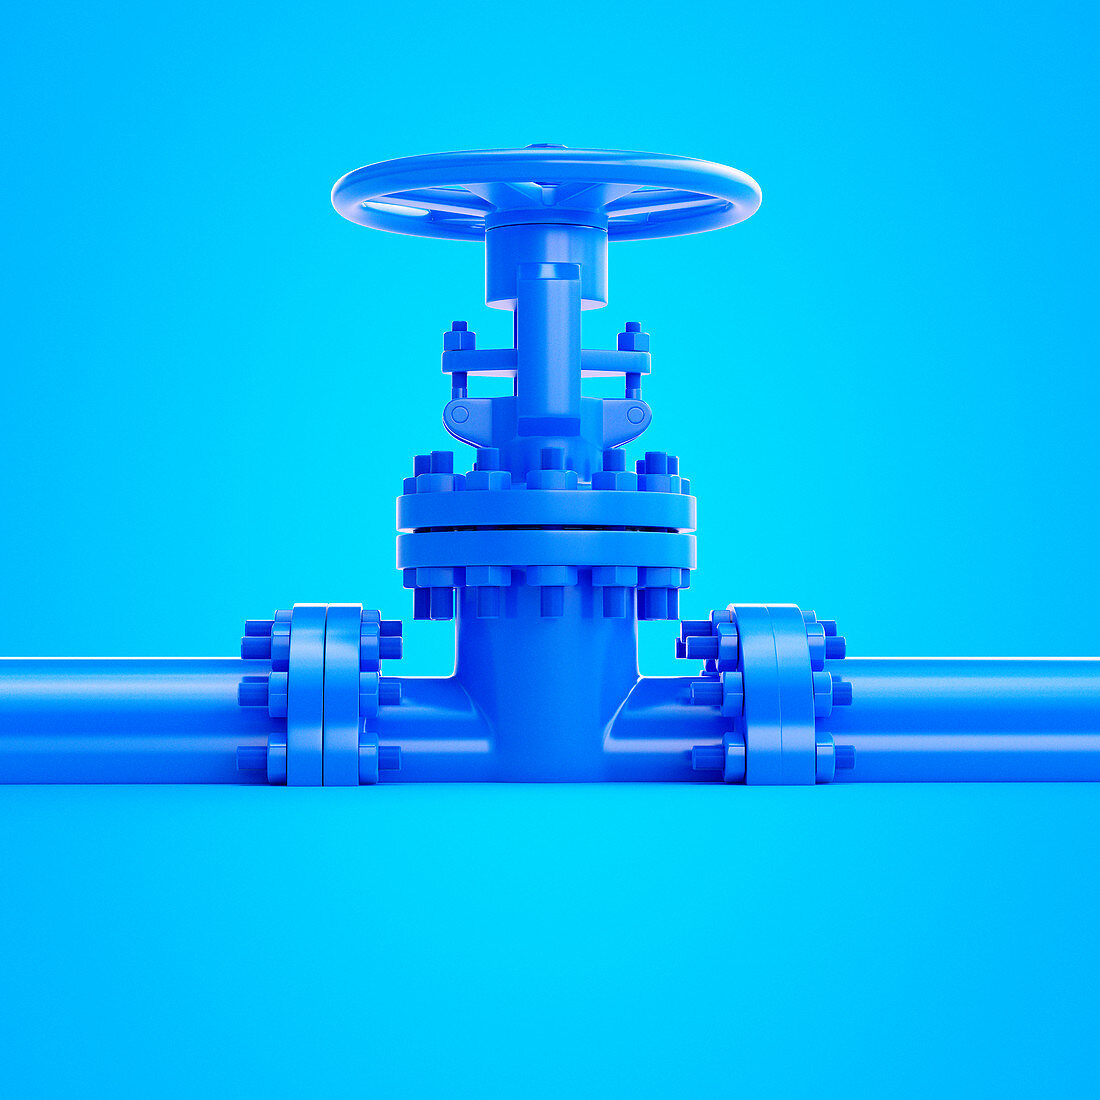 Illustration of a blue valve